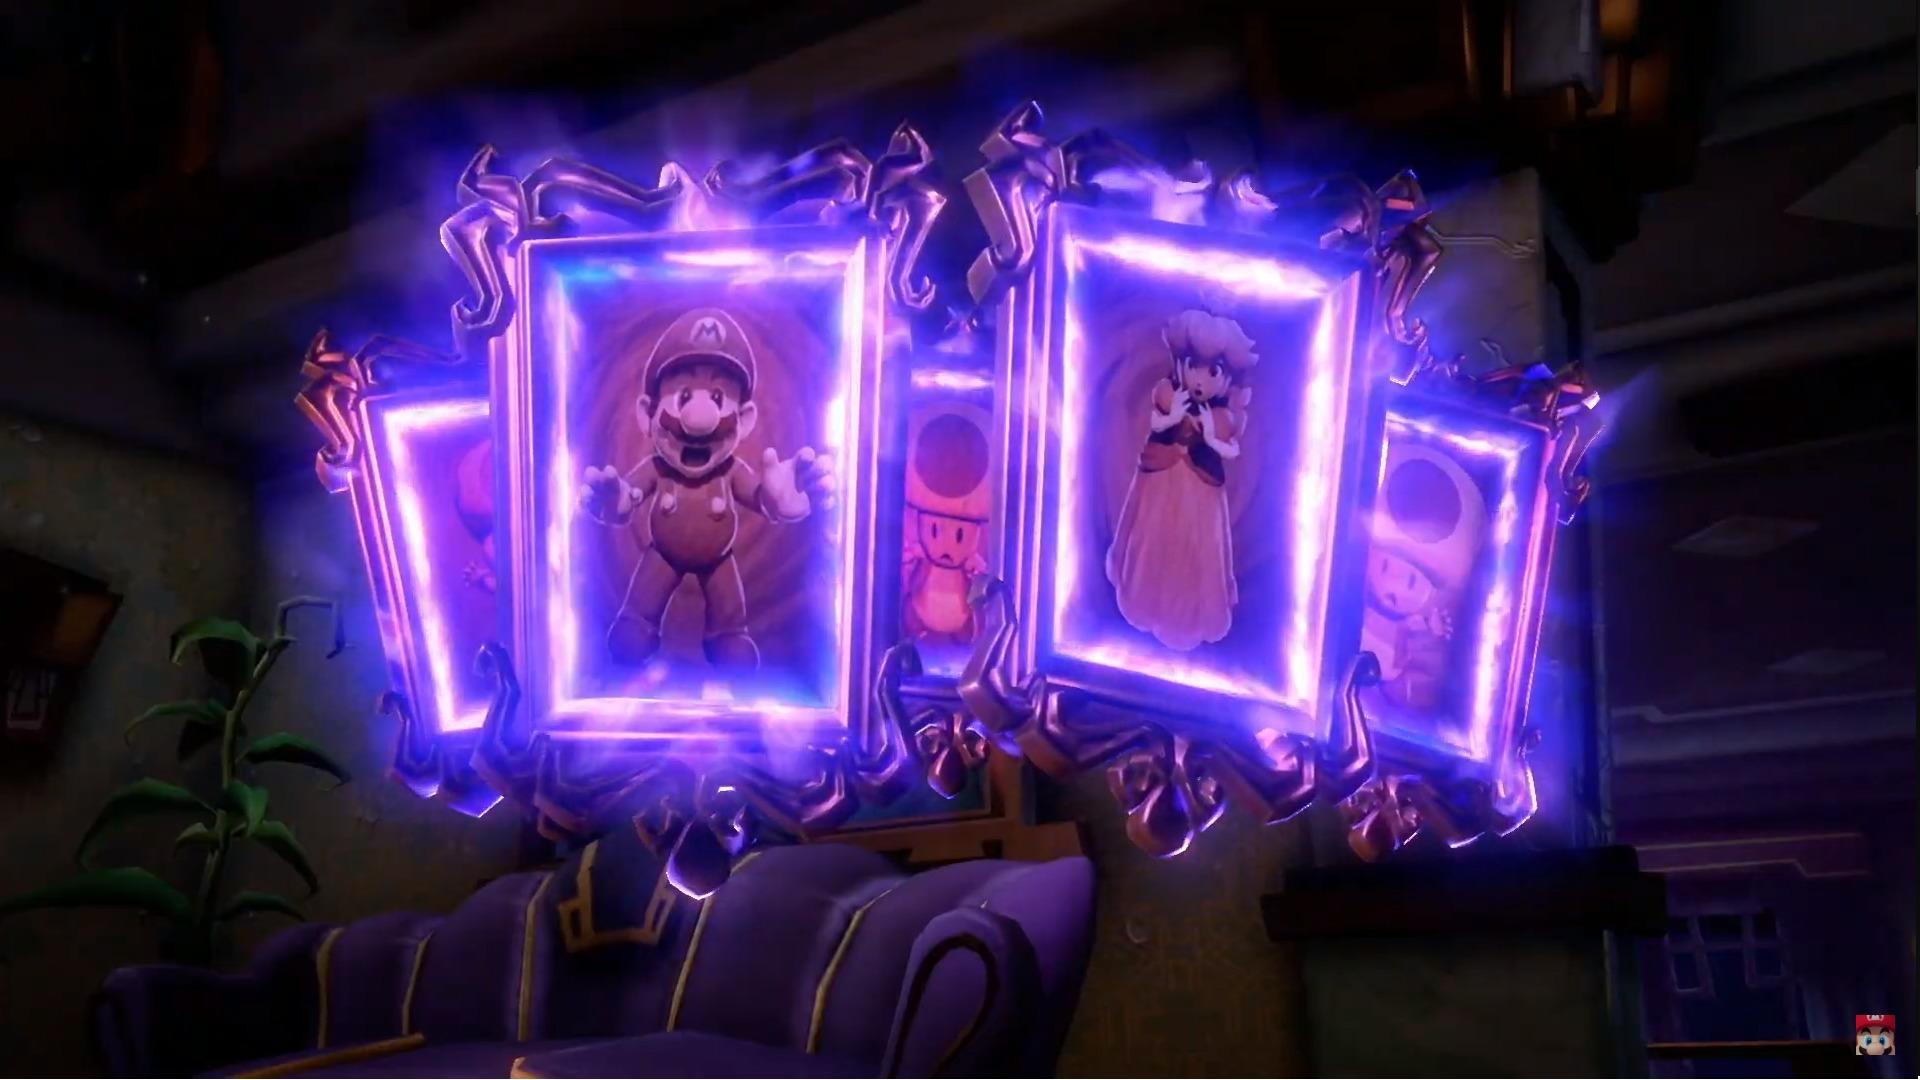 Luigi's Mansion 3 Features New Abilities, Modes